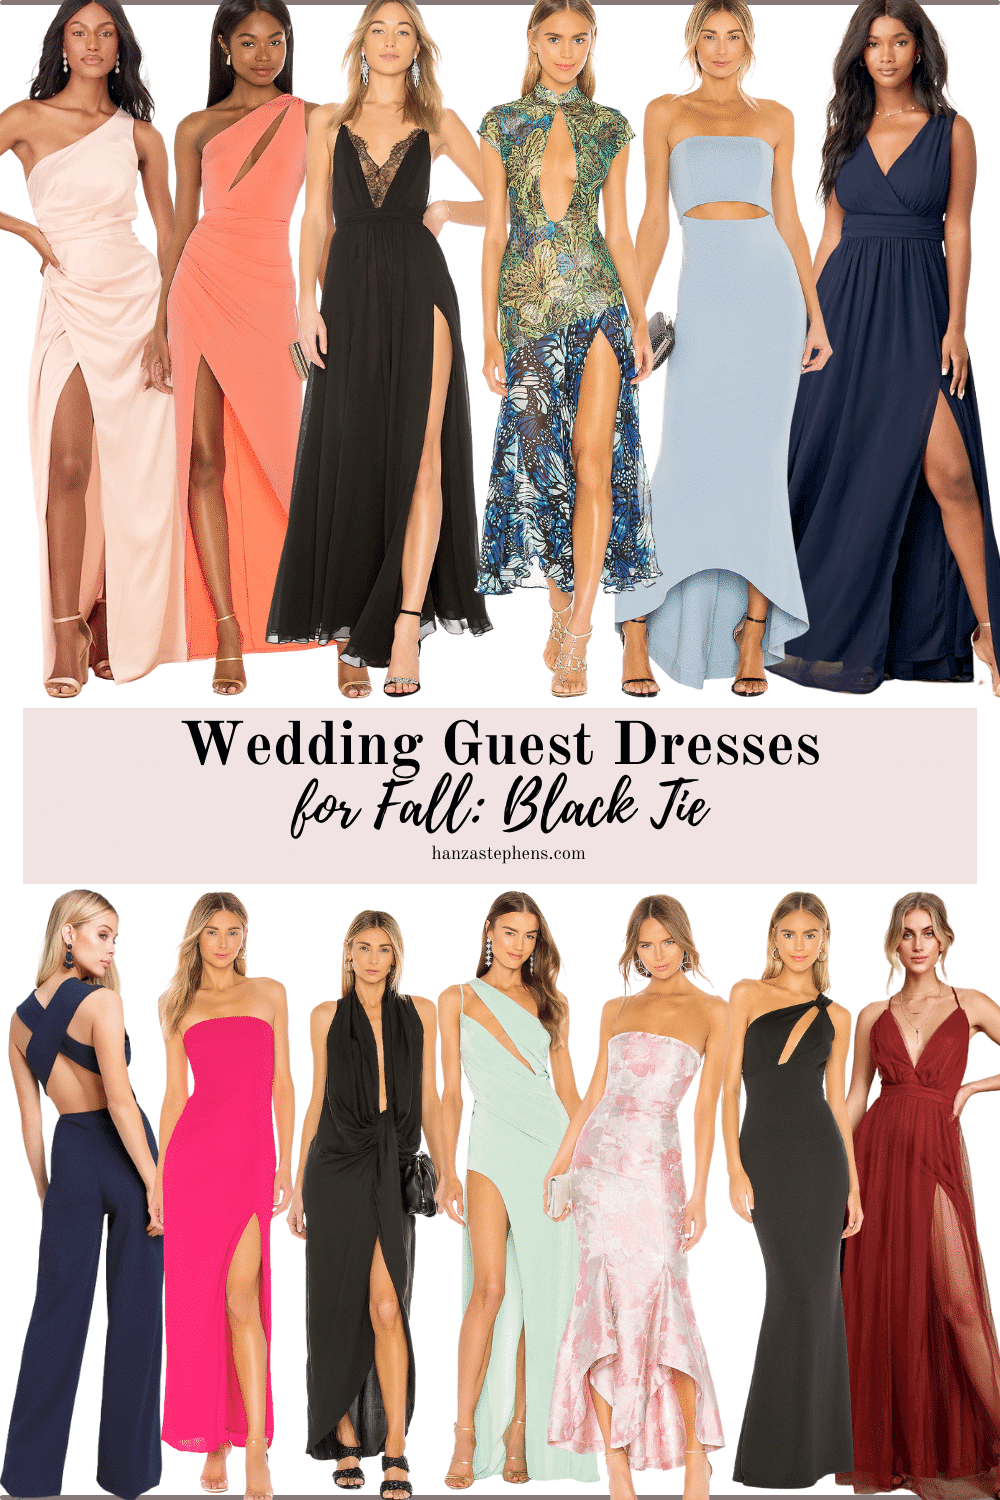 An Extensive Roundup of the Best Fall Wedding Guest Dresses